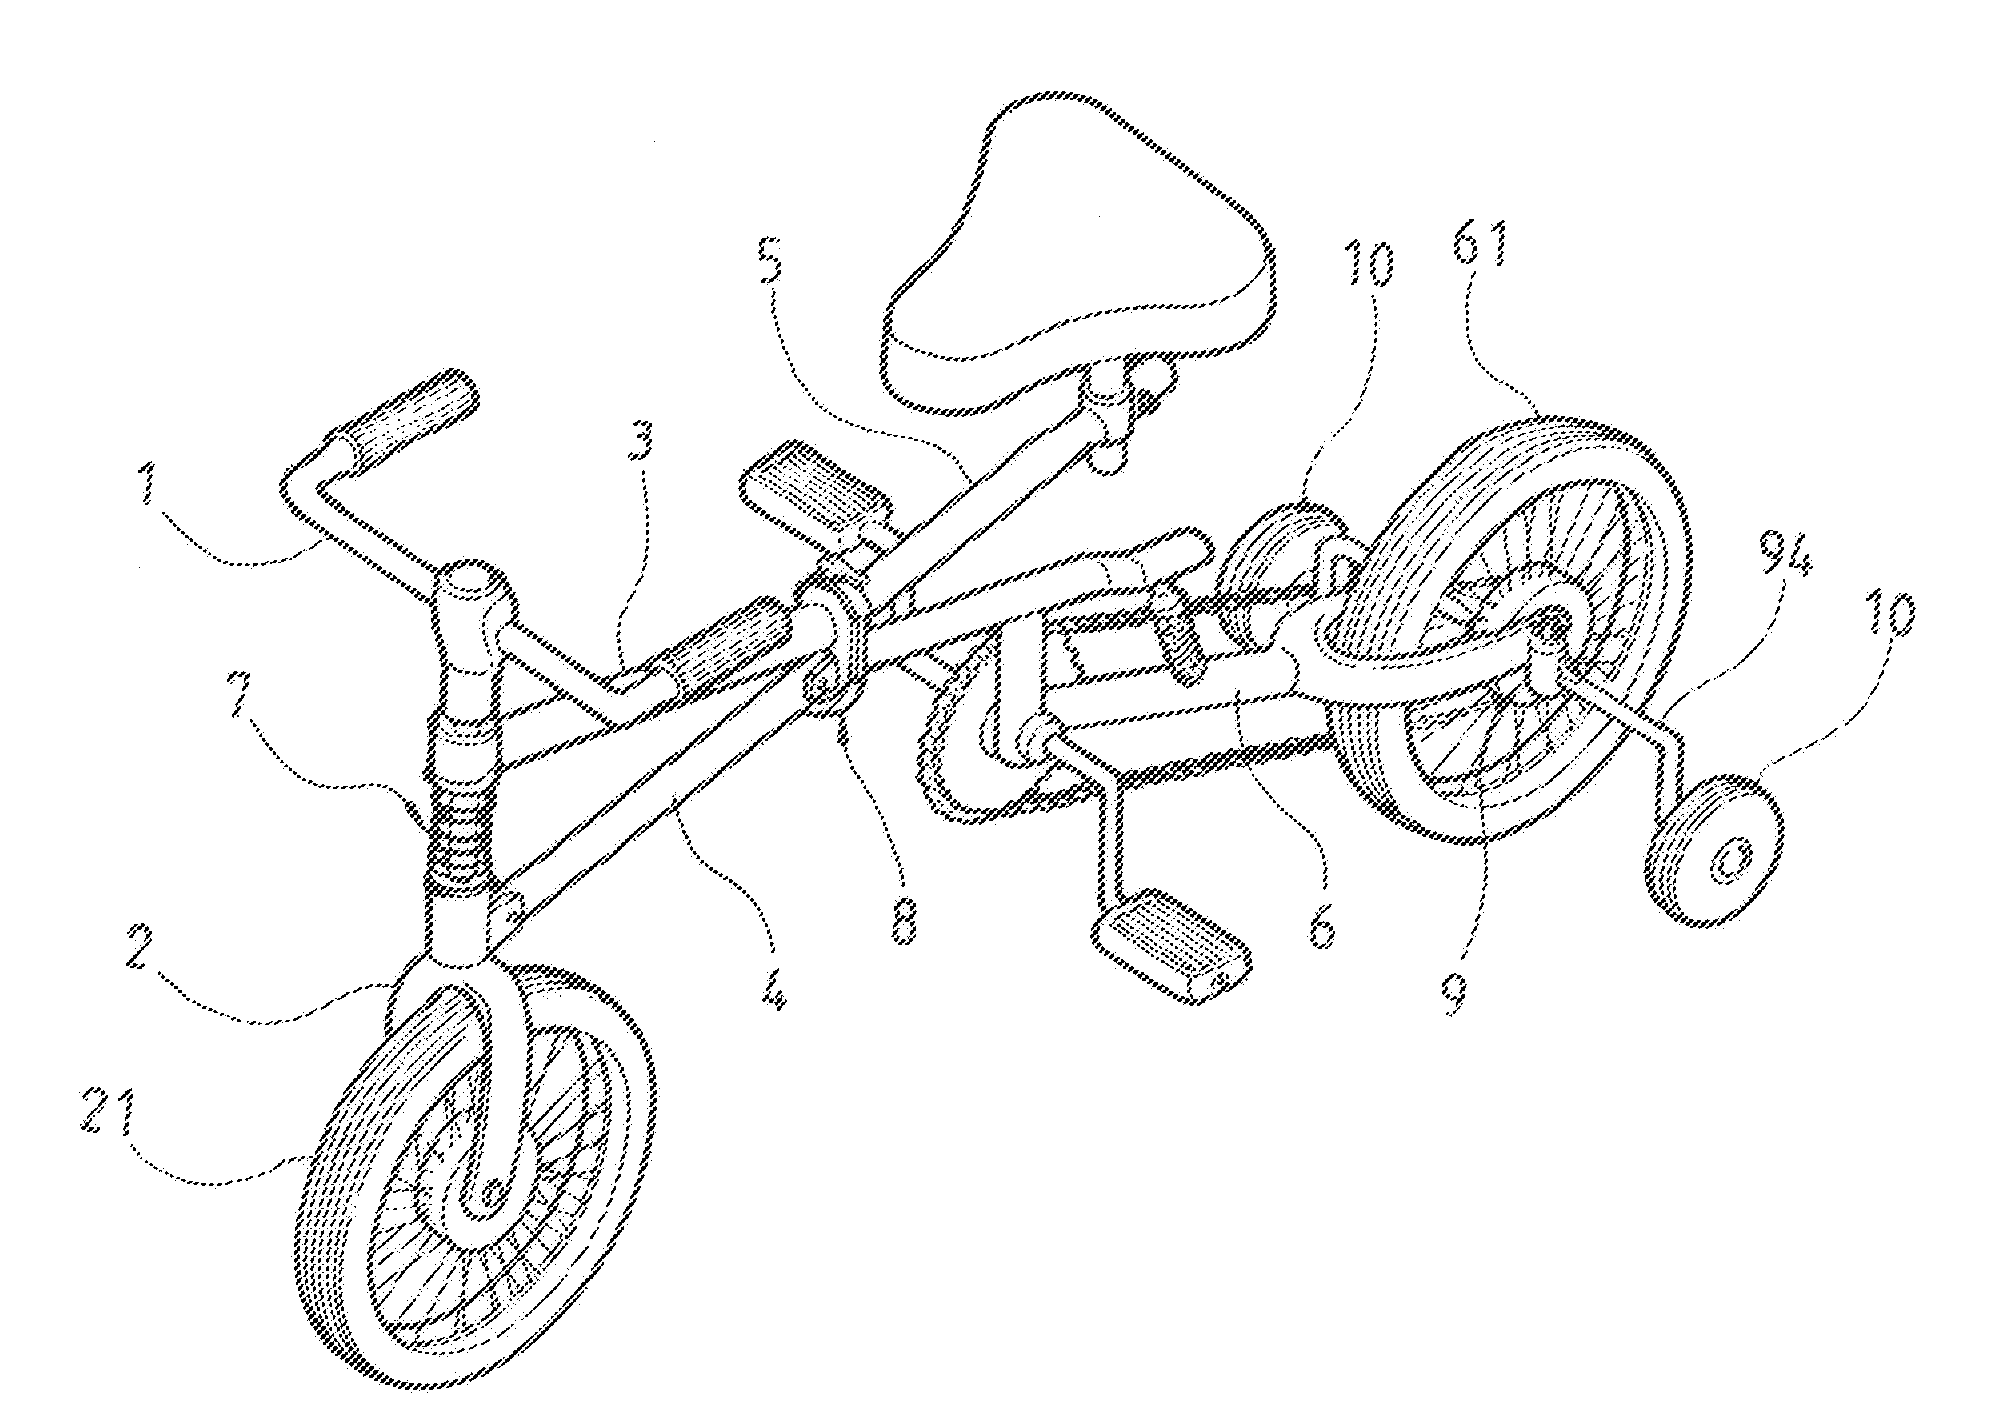 Foldable bicycle having x-shaped frame